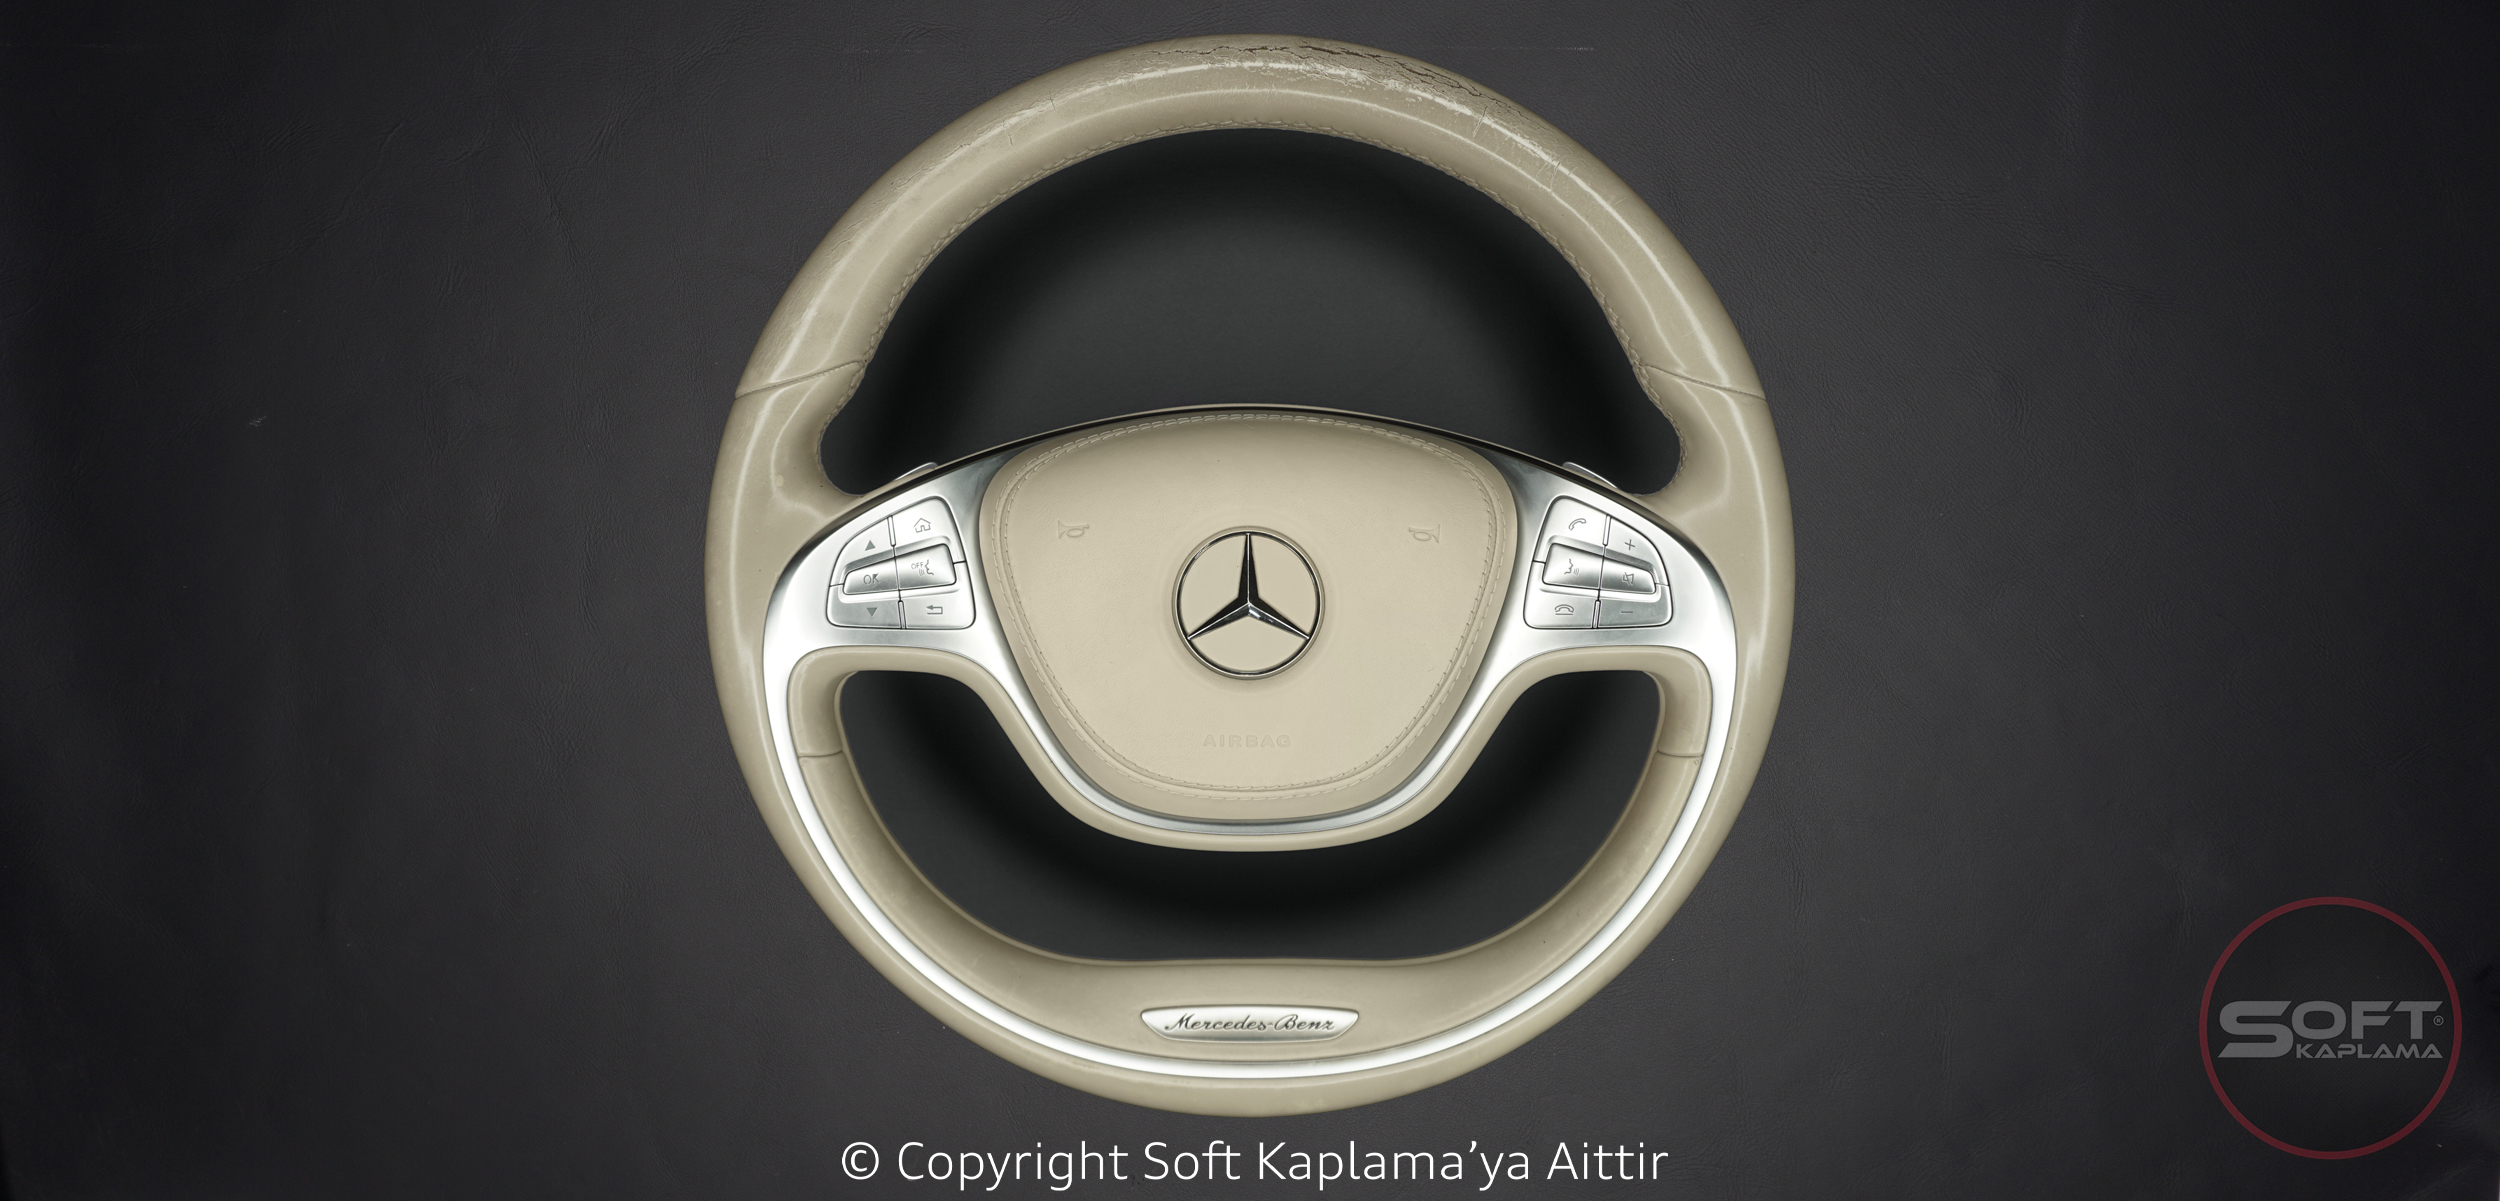 Mercedes-benz-maybach-s350-s500-sclass-fil-disi-deri-soyulma-asinma-catlama-deformasyon-yenileme-deri-kaplama-dikme-soft-kaplama-restorasyon-once.jpg